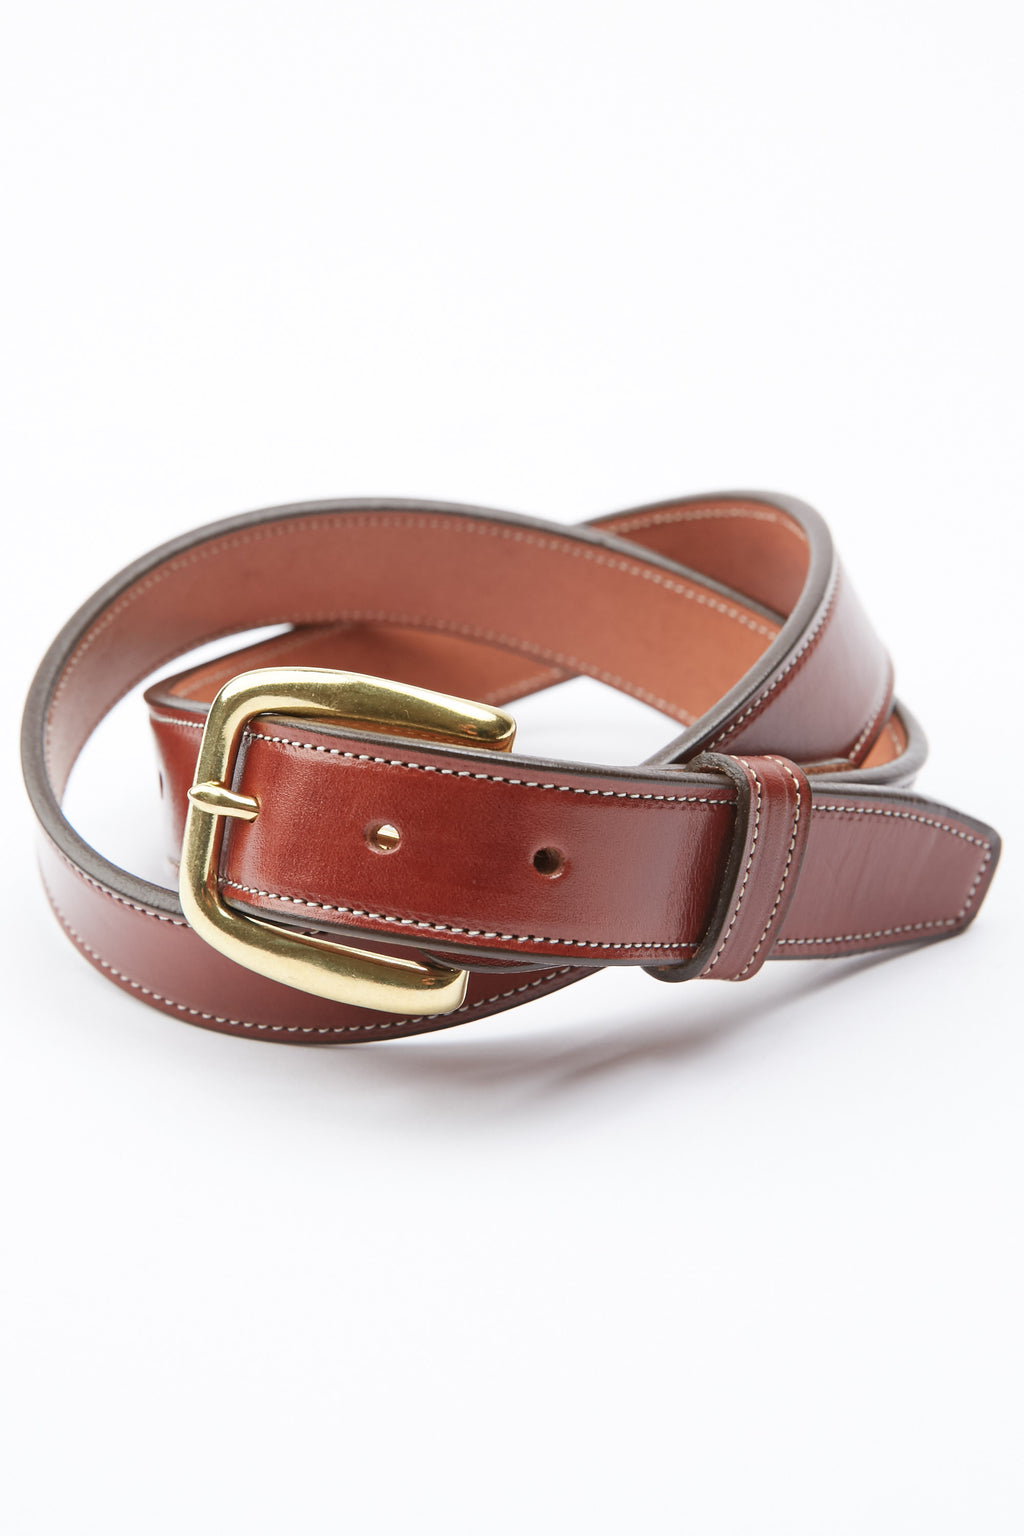 Tory Leather Stitched Belt - Oakbark (2257)